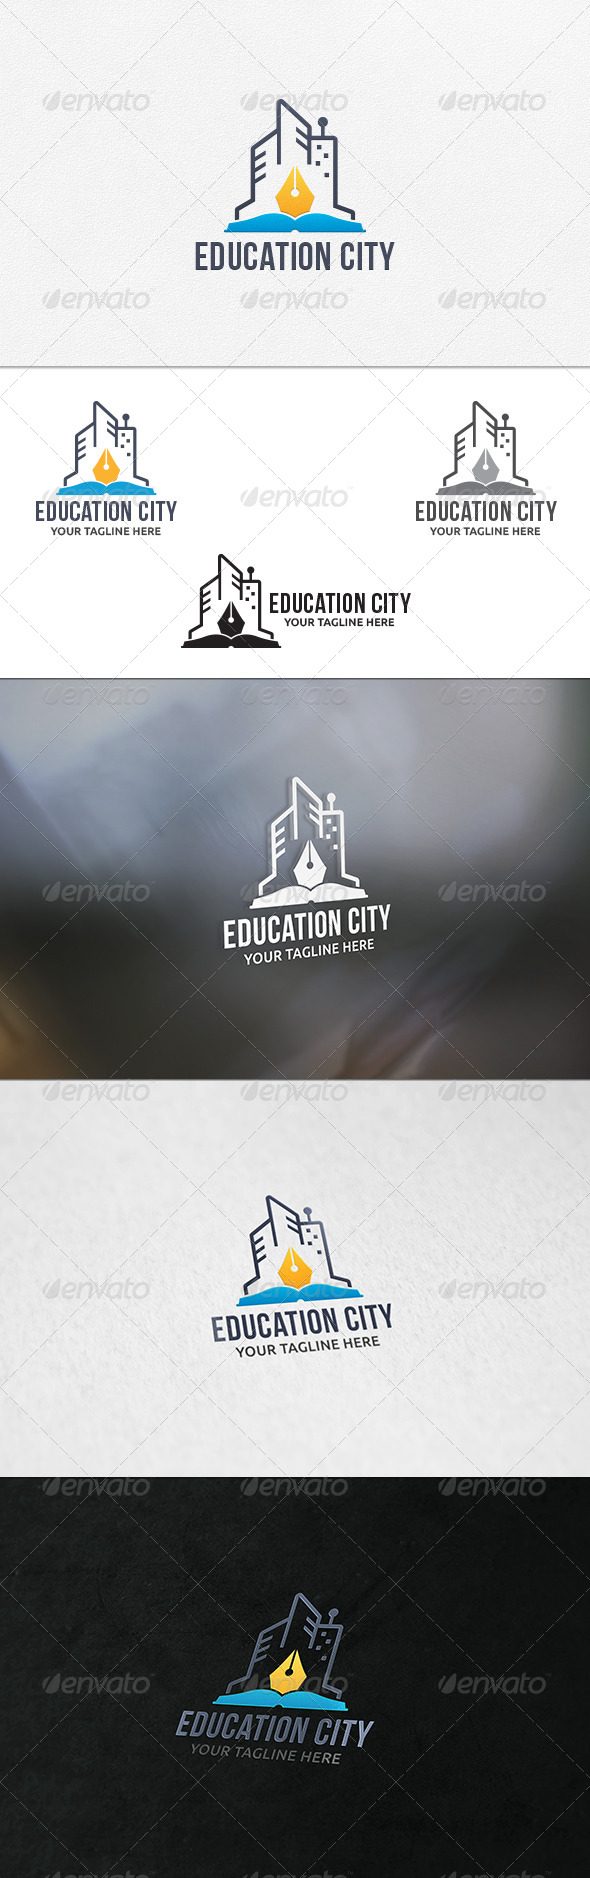 Education City - Logo Template